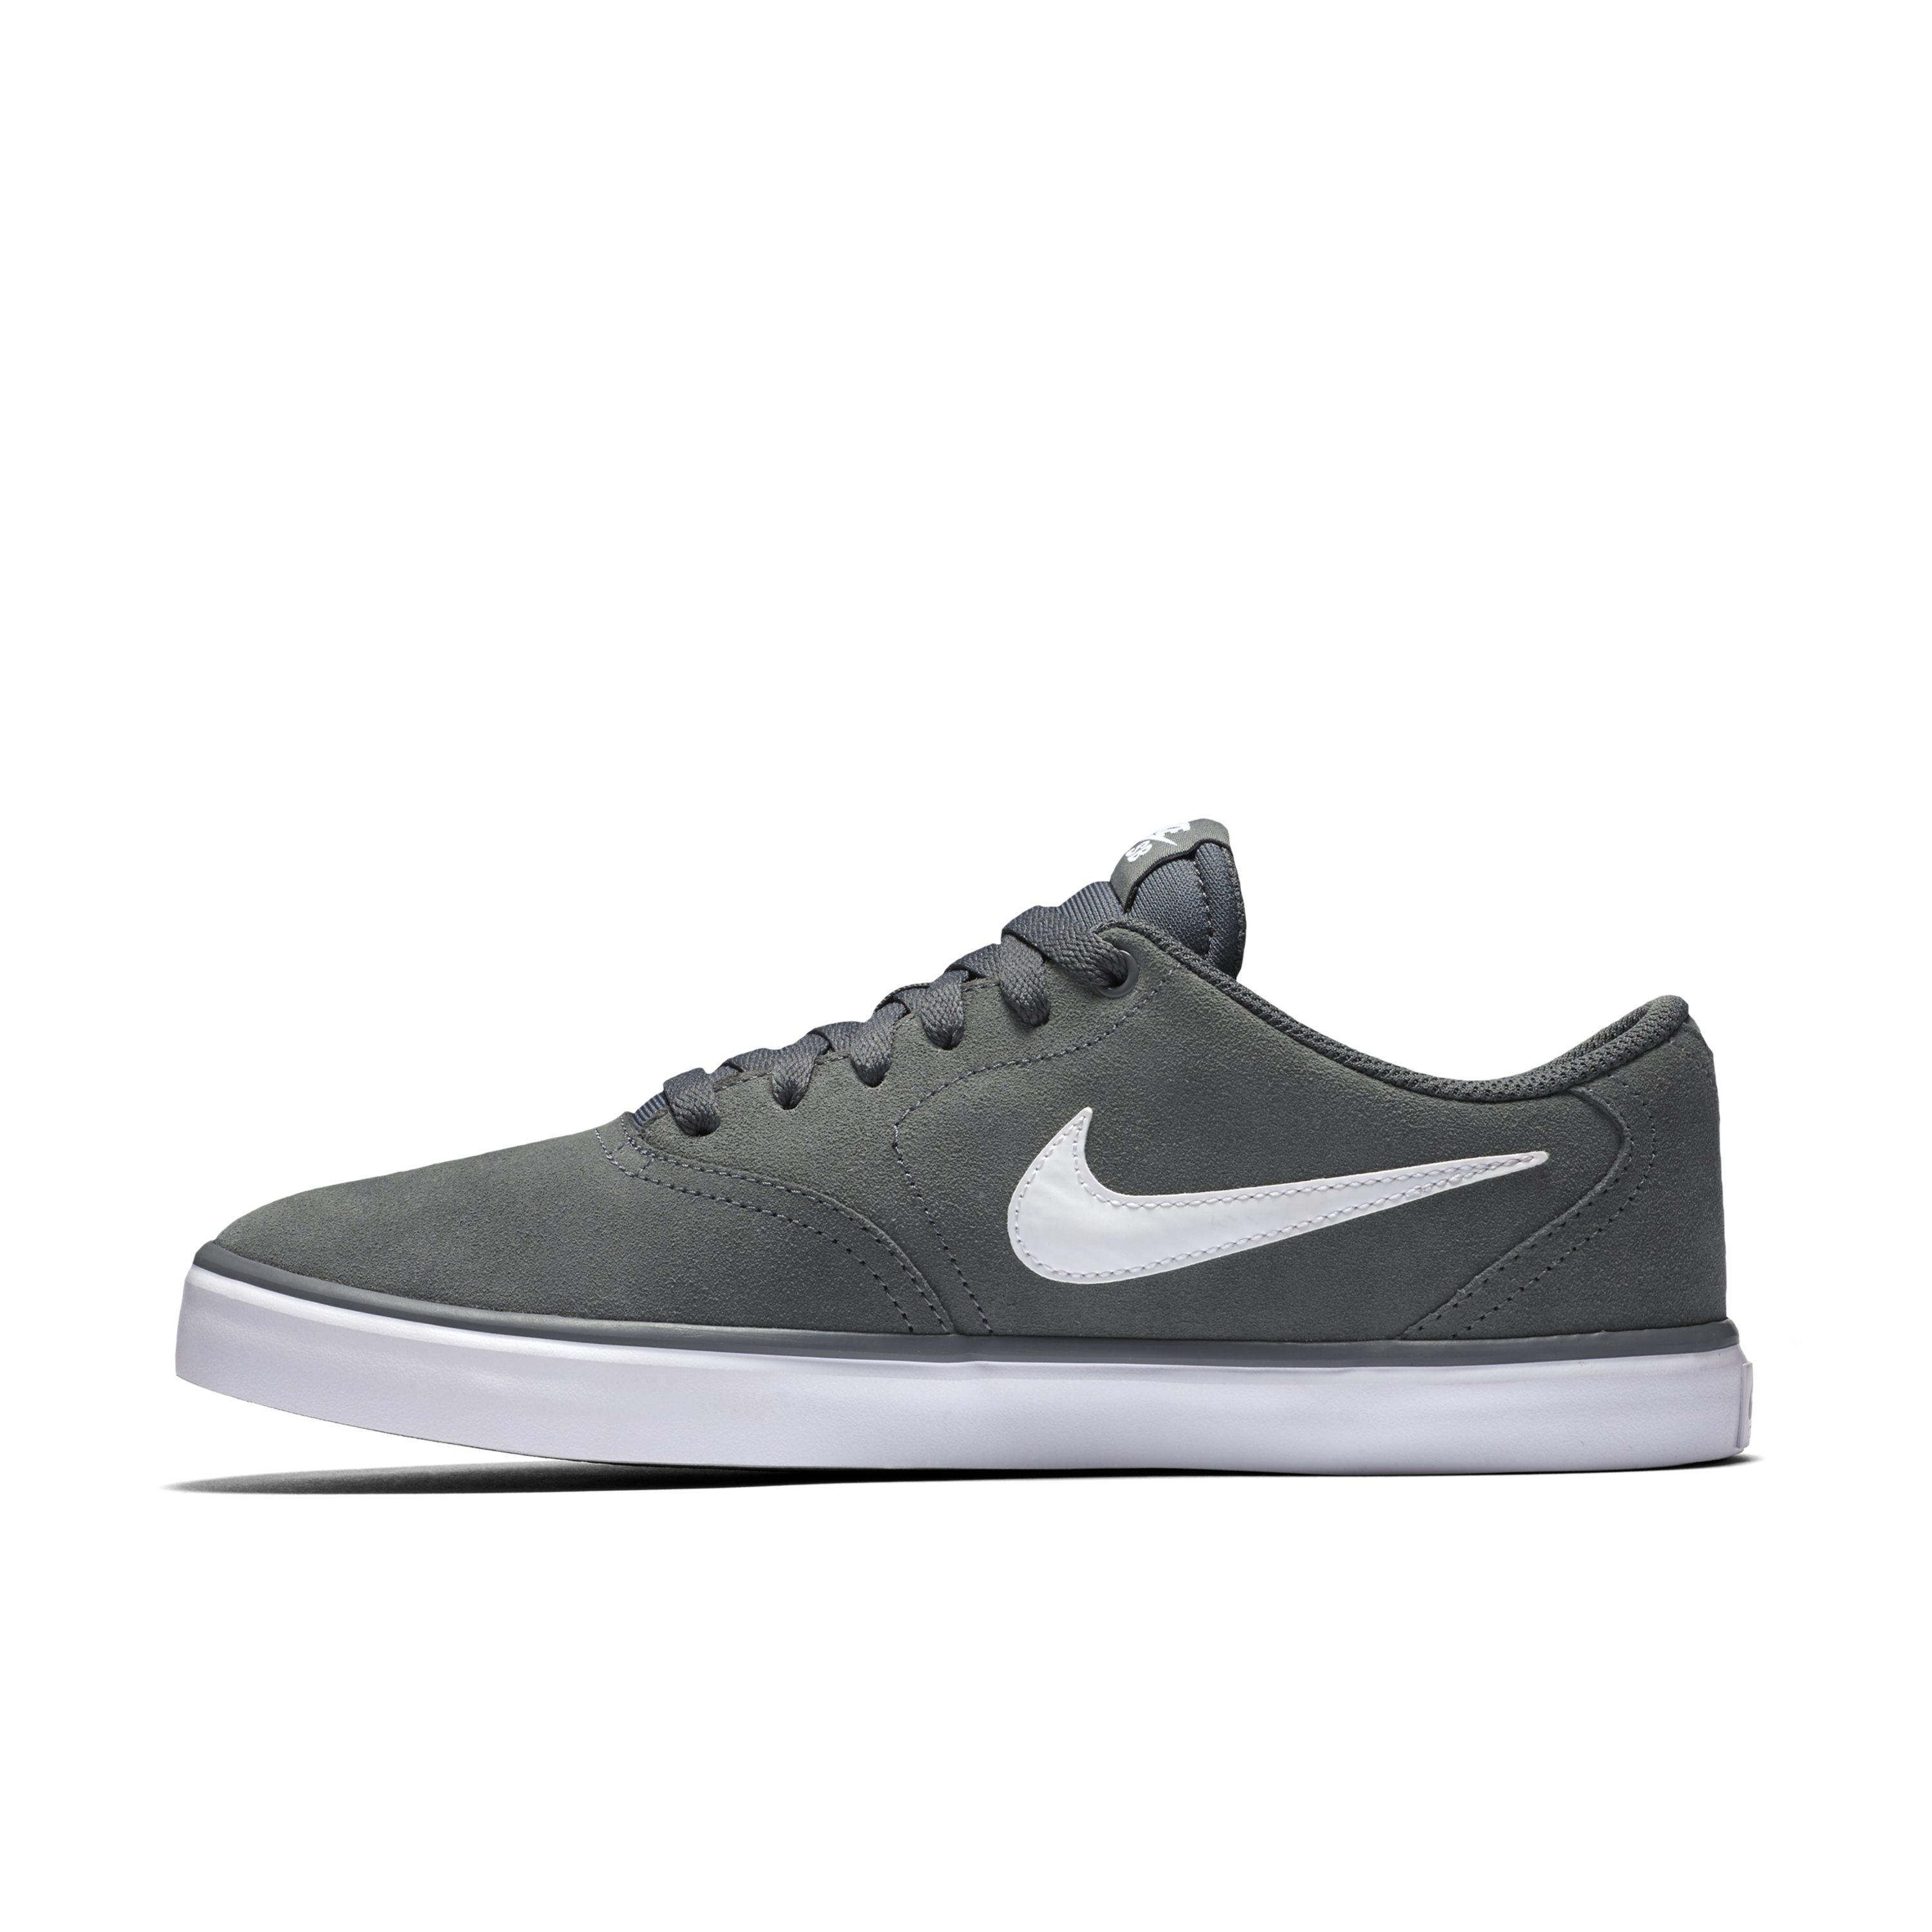 Nike Sb Check Solarsoft Skateboarding Shoe in Grey (Grey) for Men - Save  64% - Lyst